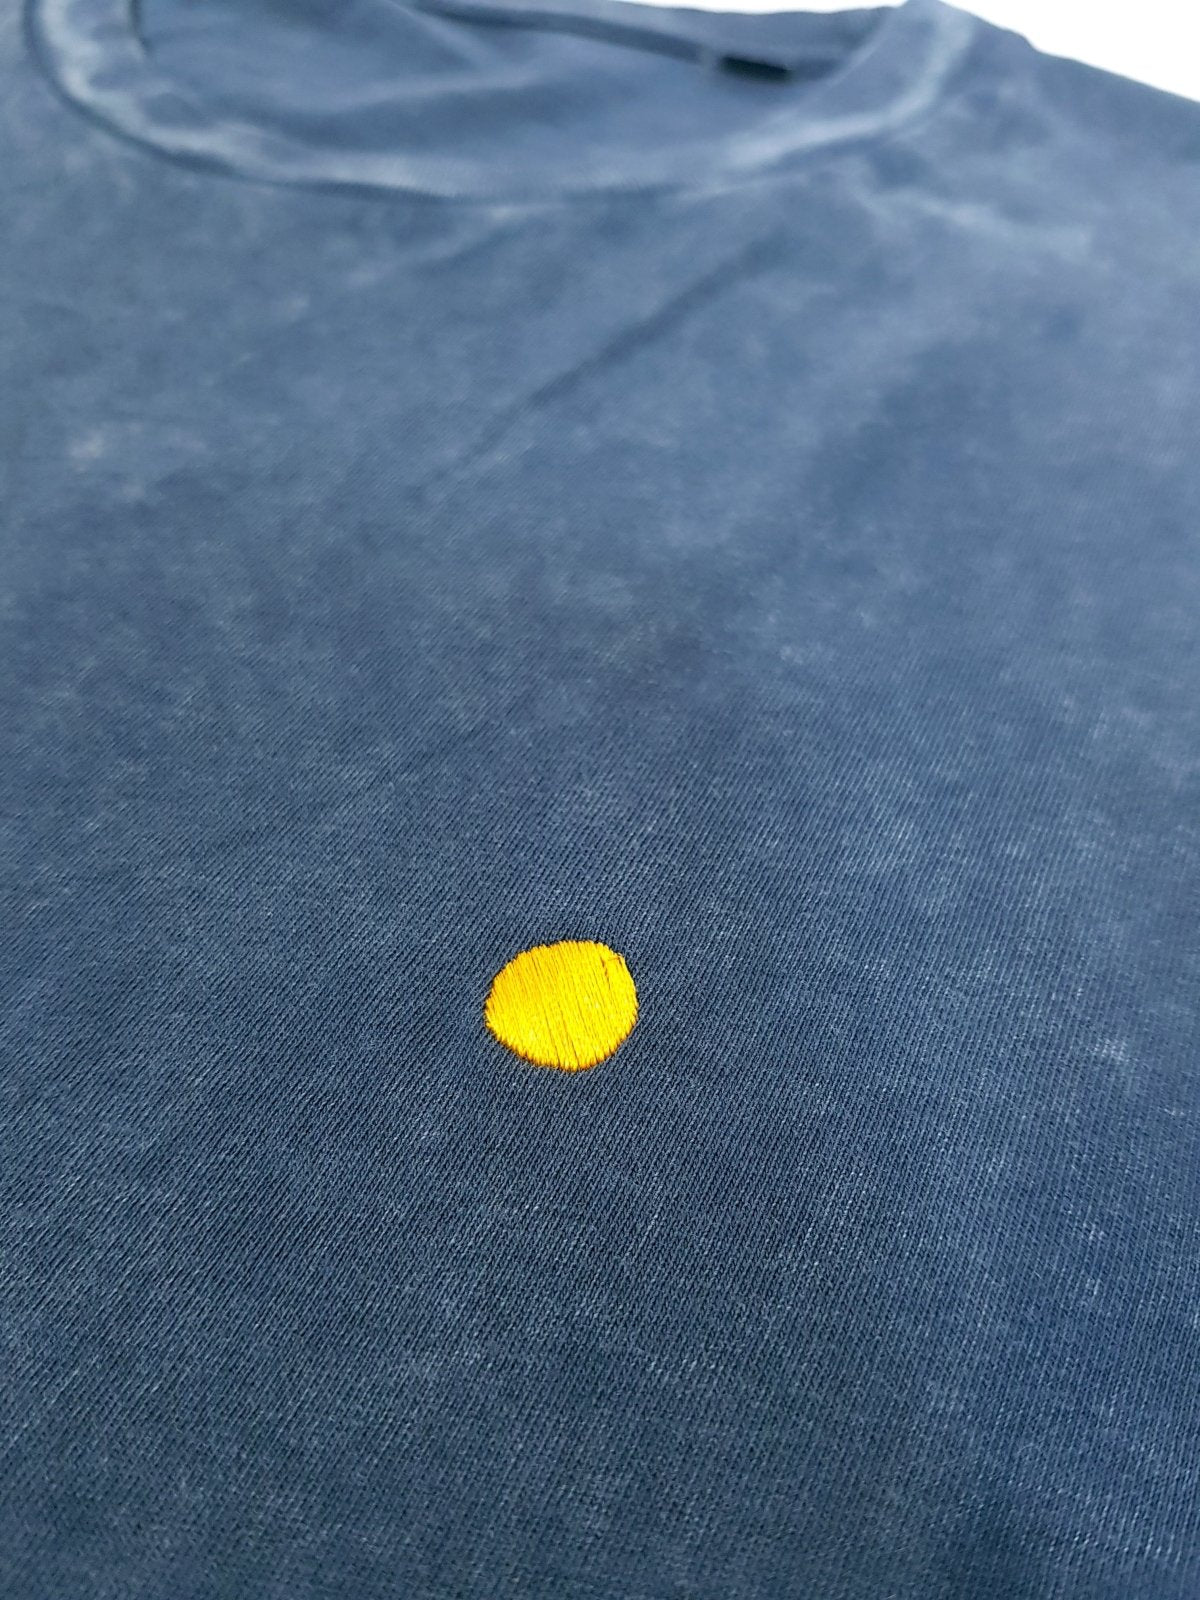 yellow dot G. Dyed Aged India Ink Grey Unisex Tees te koop in de webshop van Almost Summer Amsterdam